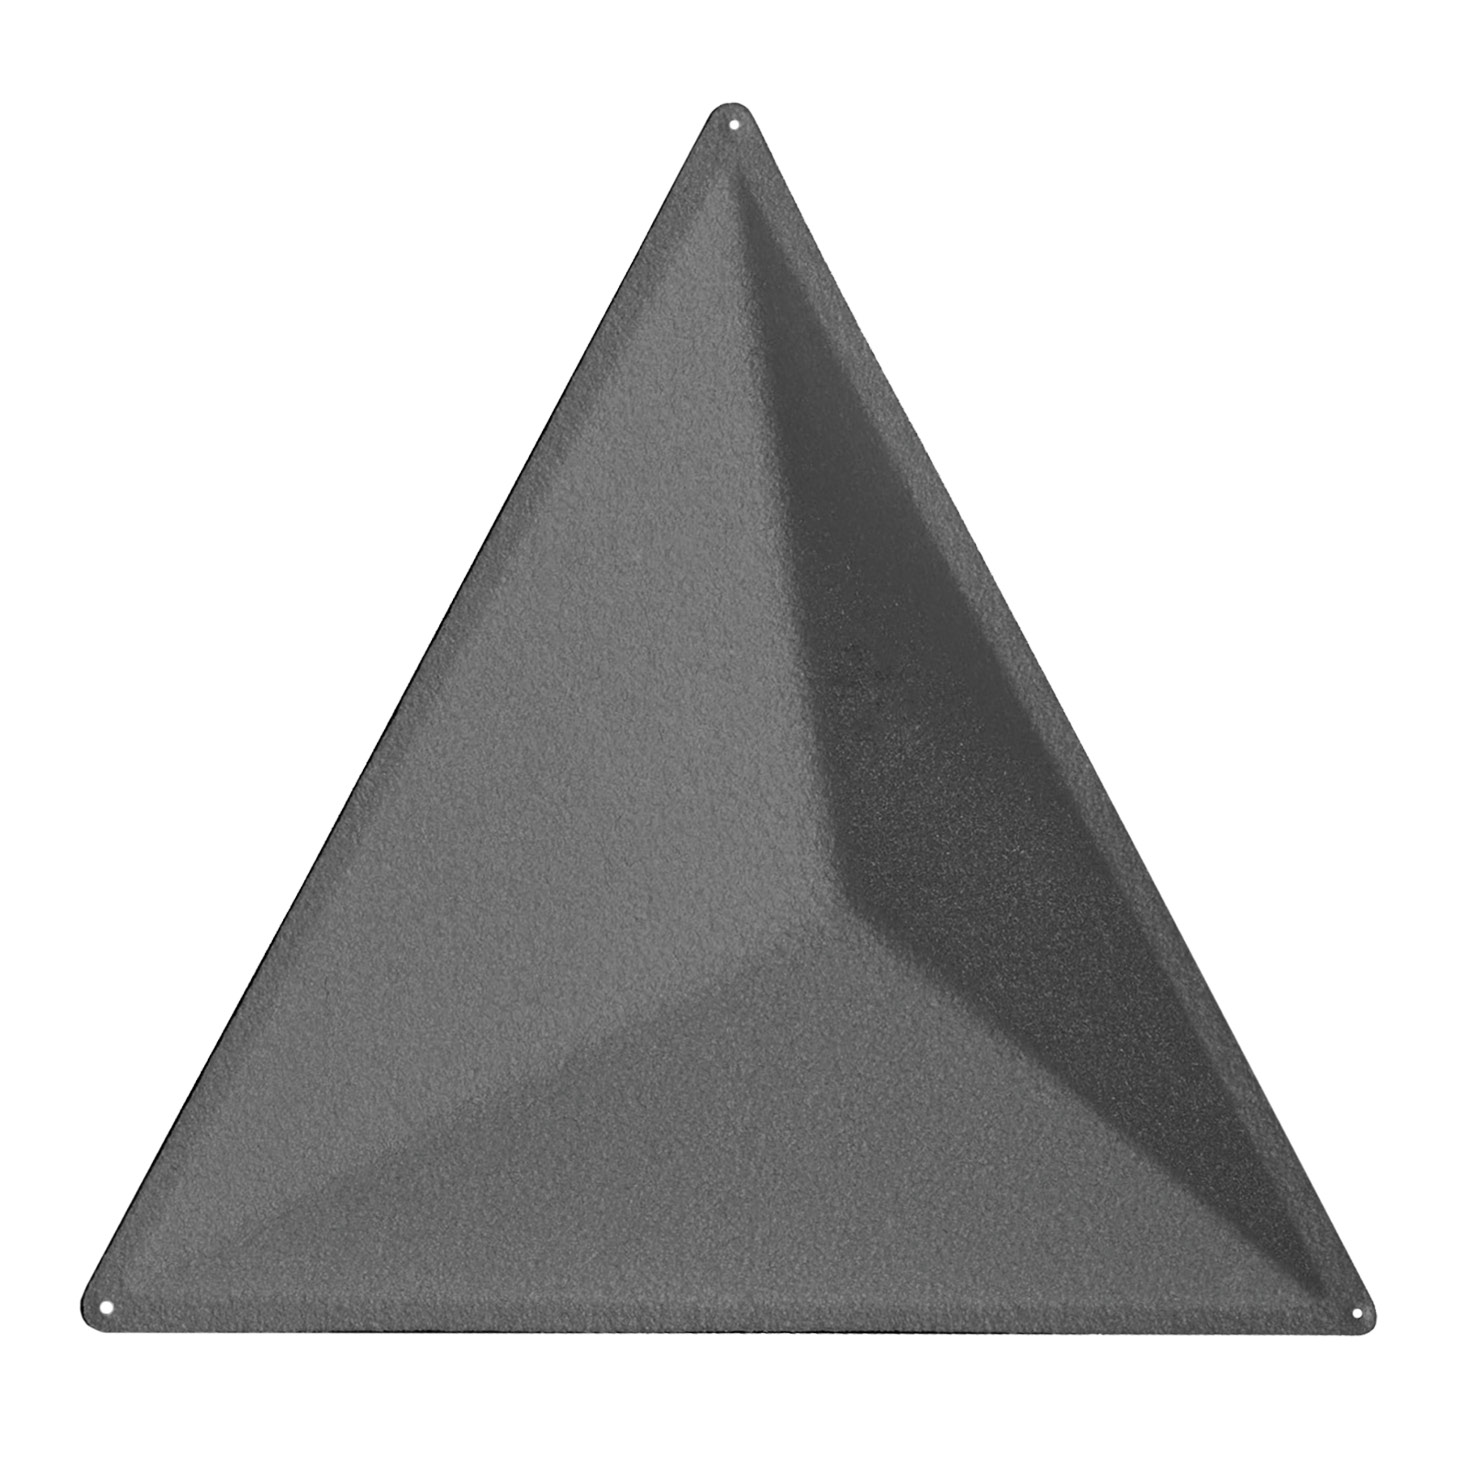 Aircone grey sound absorbing tile